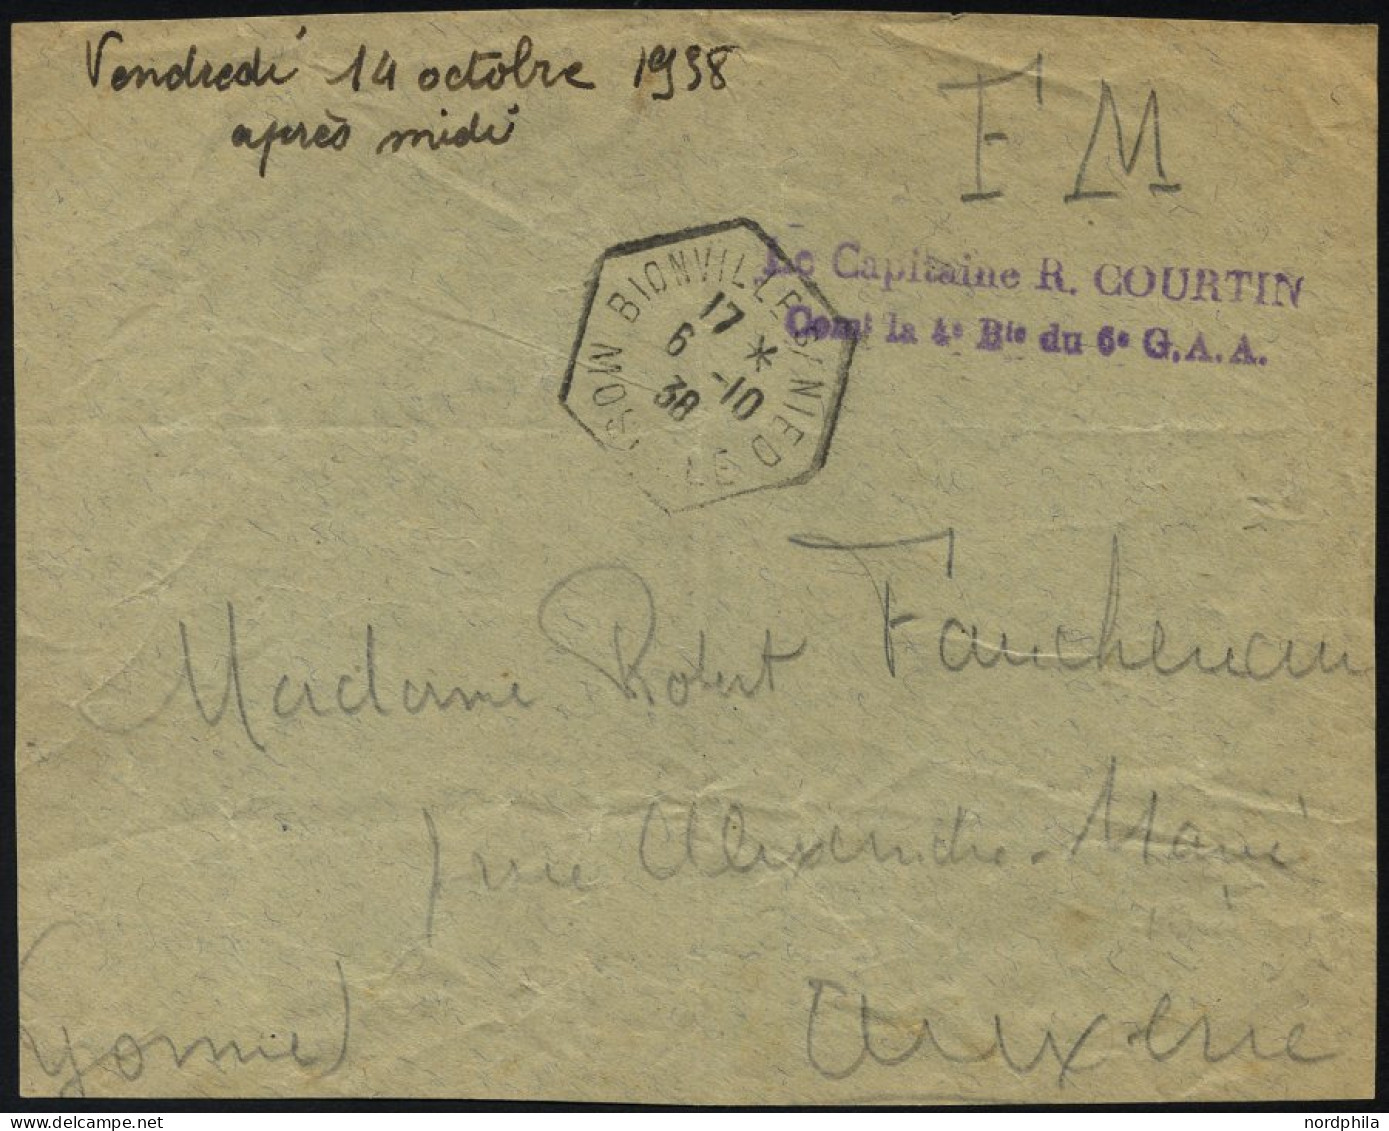 FRANKREICH FELDPOST 1938, Violetter Absenderstempel Le Capitaine R. Courtin, Con La 4 D Du 6 G.A.A. Auf Briefvorderseite - WW II